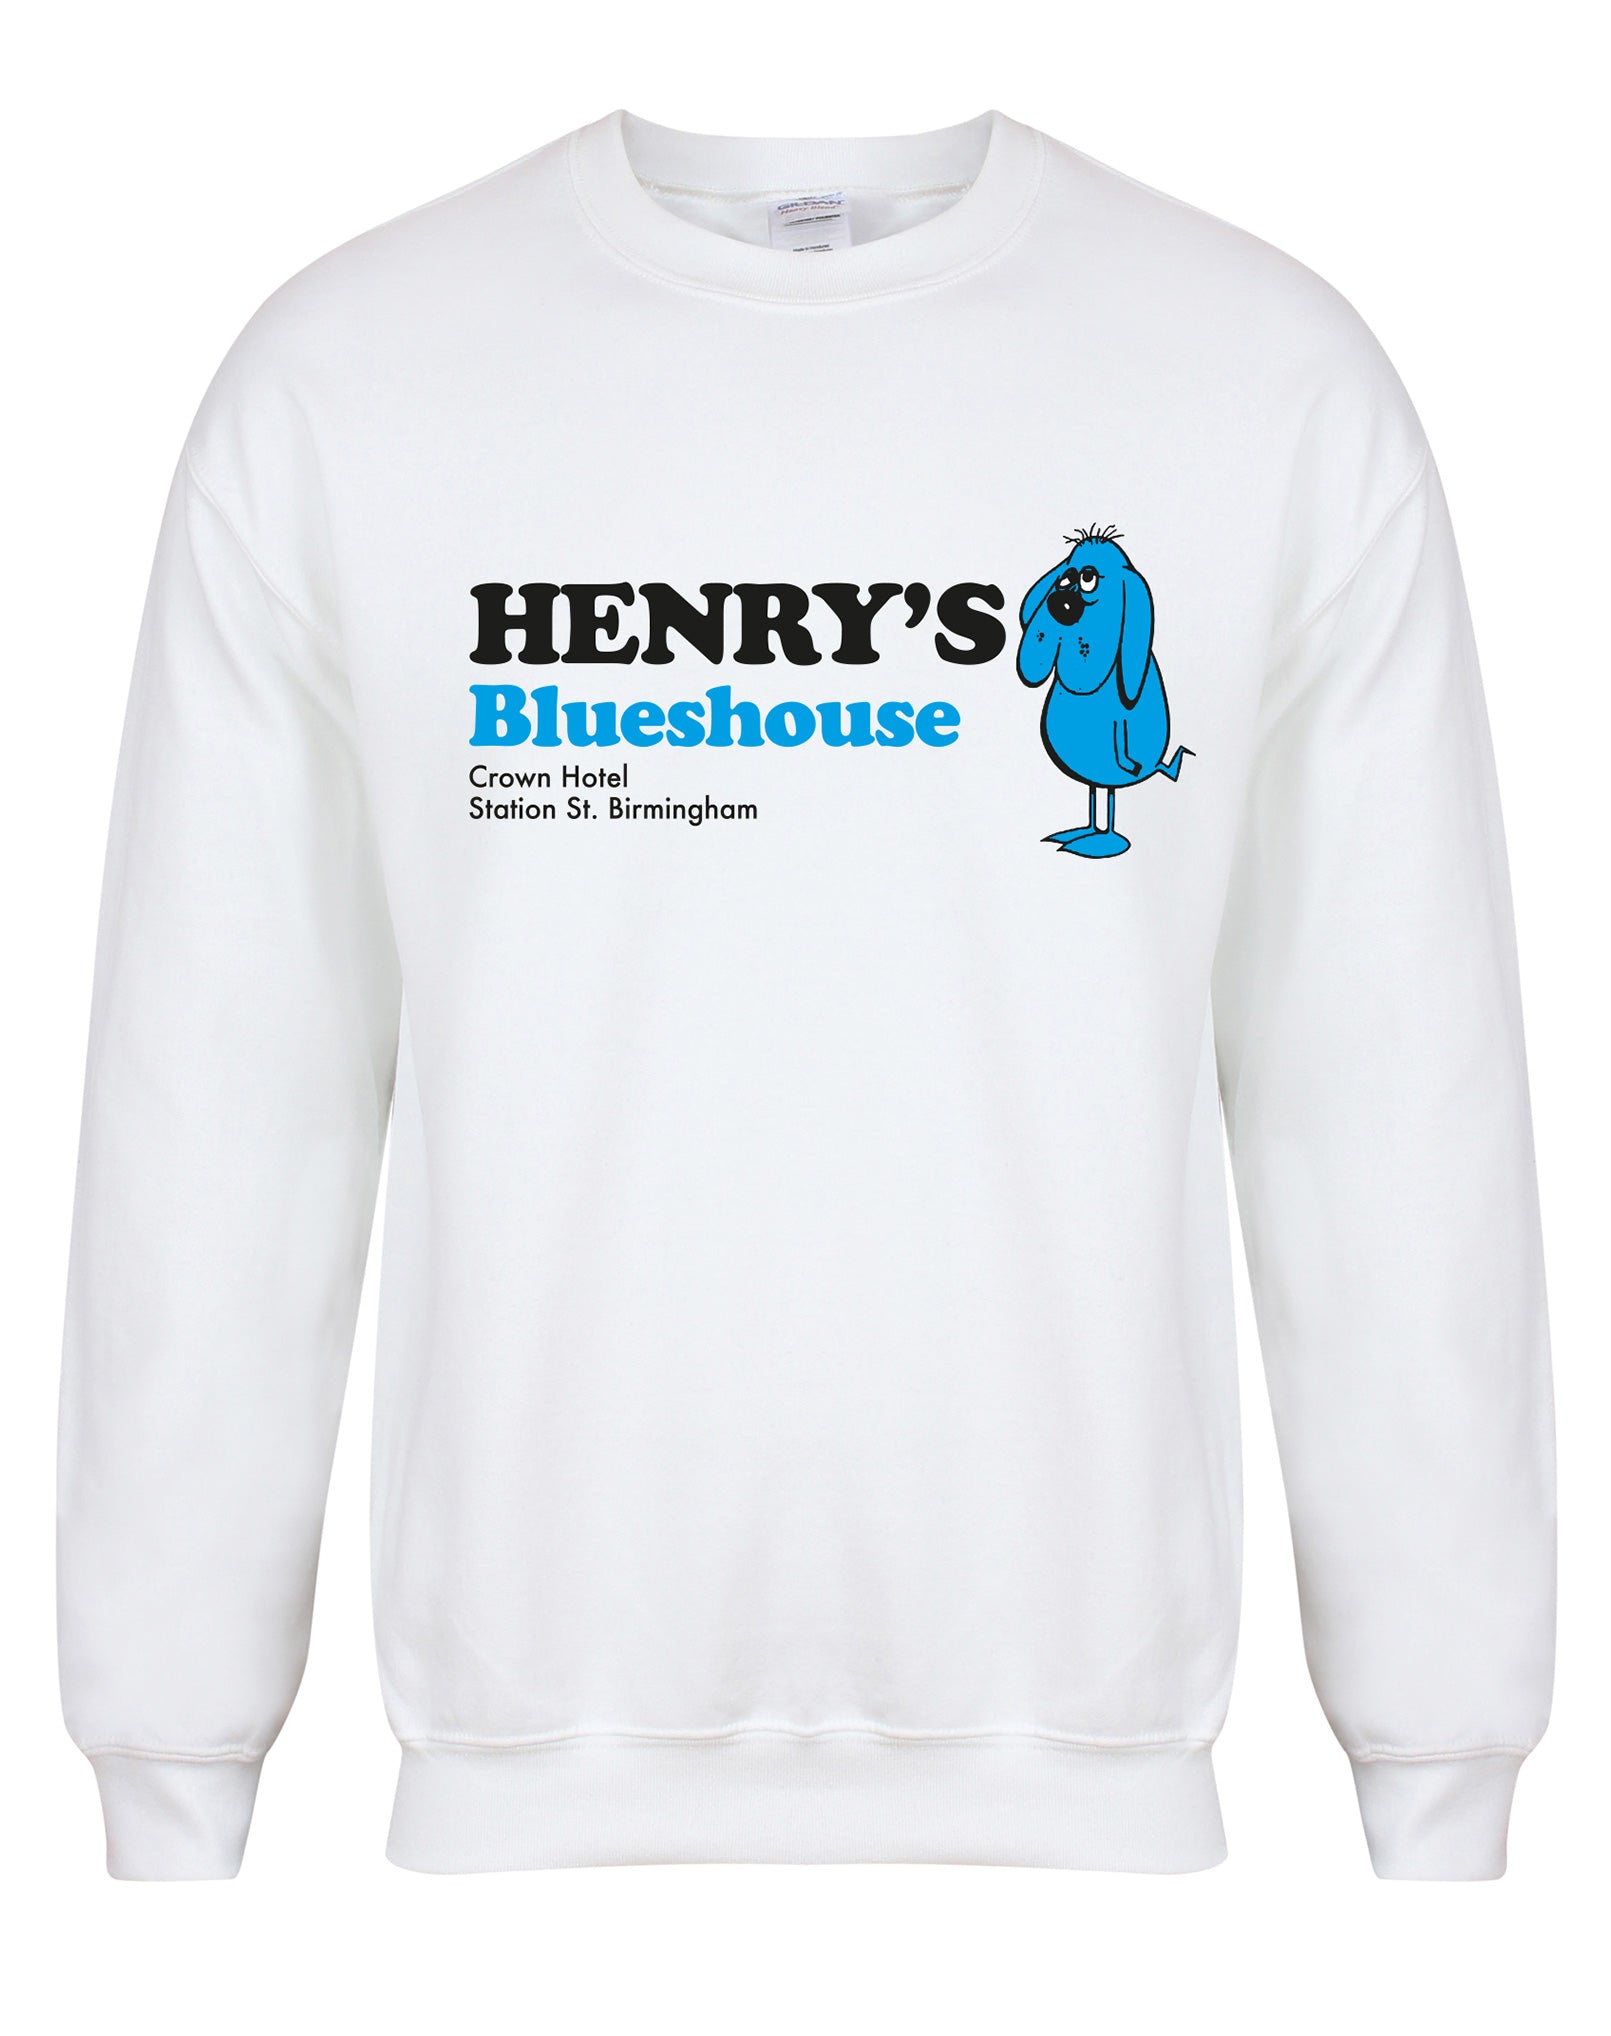 Henry's Blueshouse unisex fit sweatshirt - various colours - Dirty Stop Outs